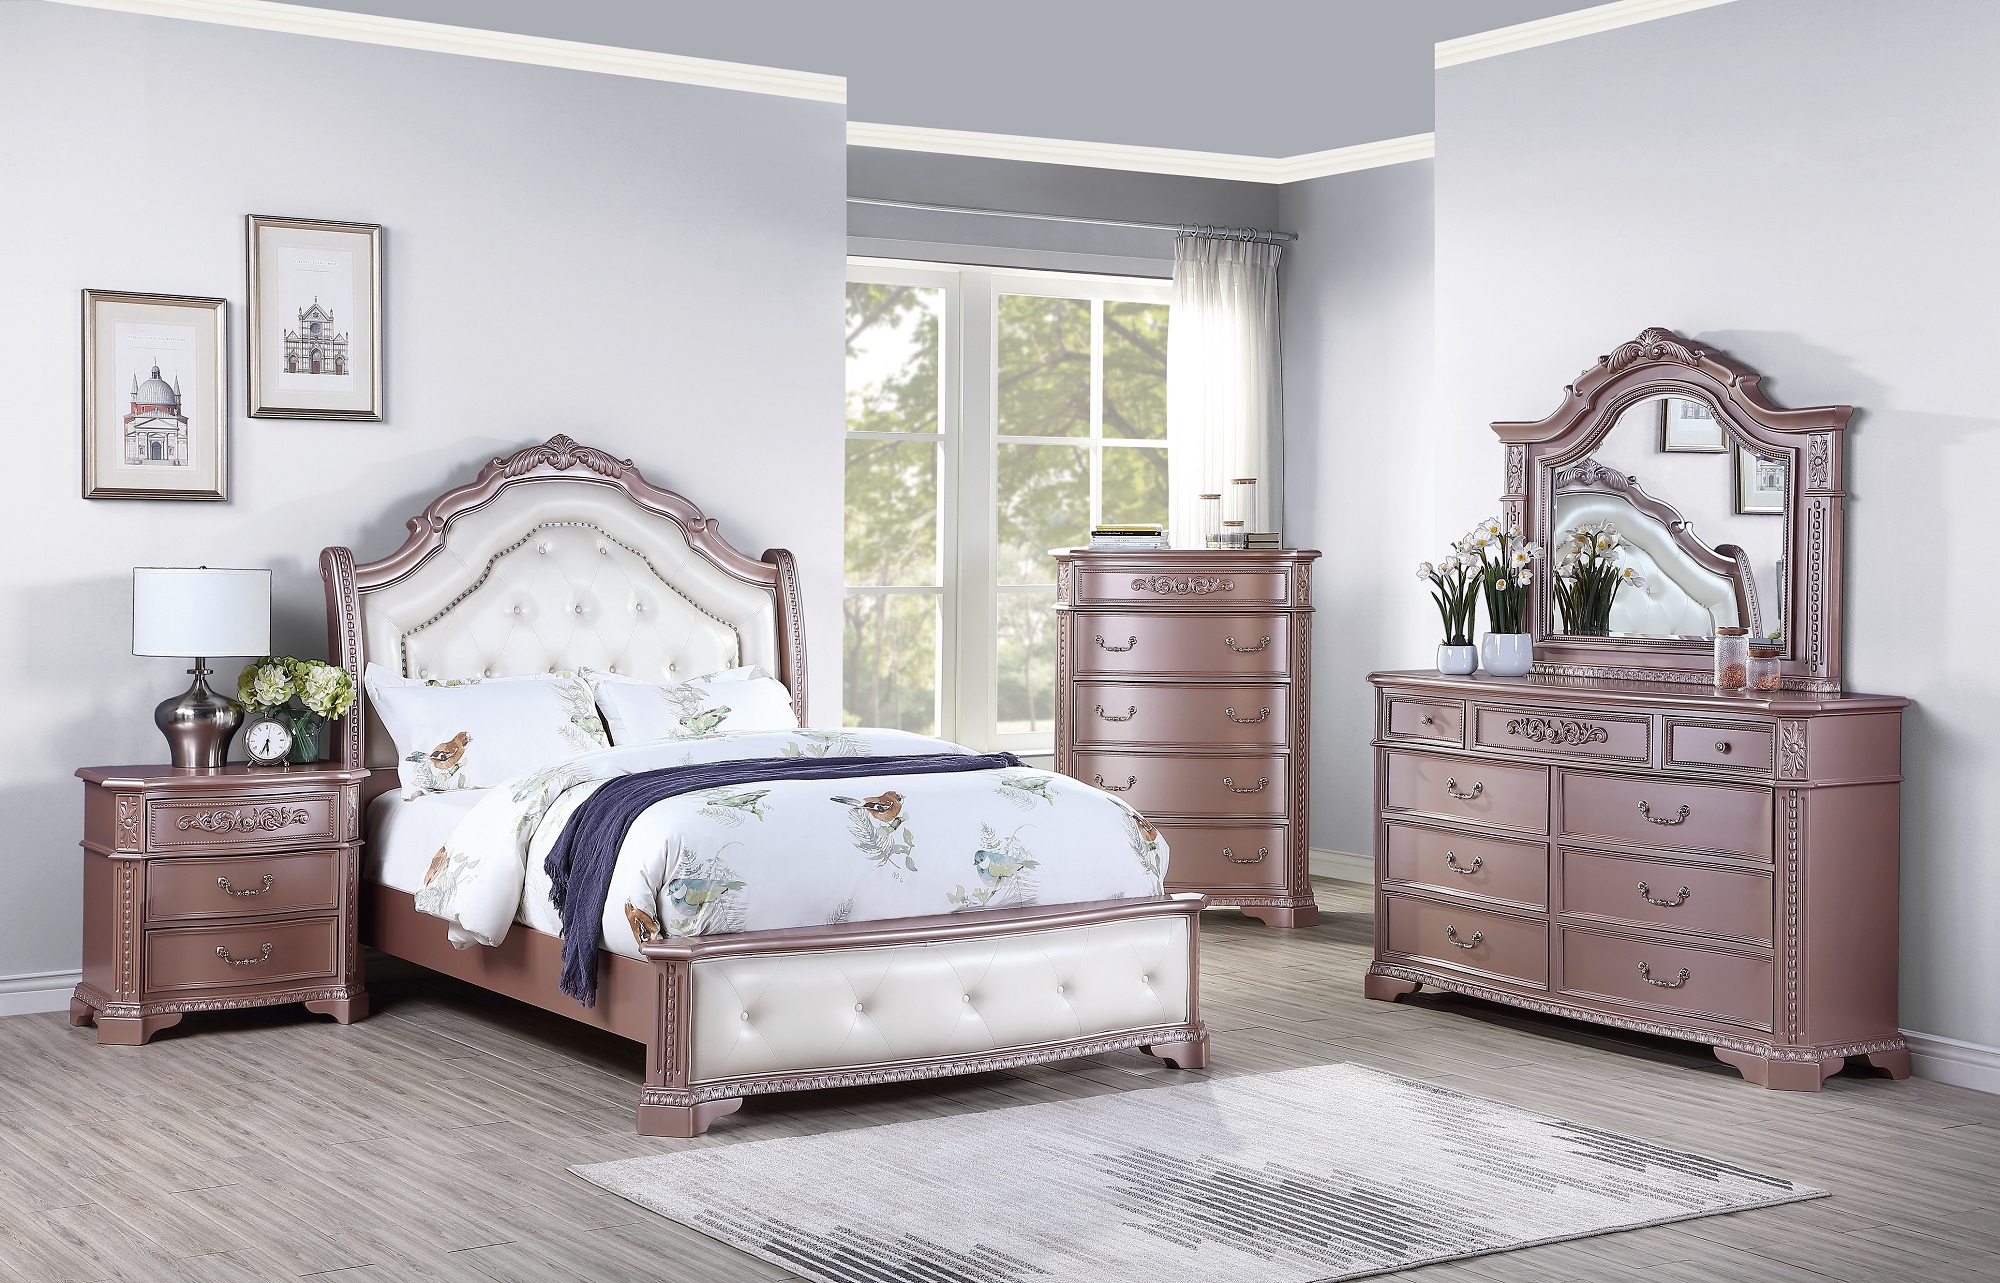 Esofastore Formal Classic 4pc Set Queen Size Bed Dresser Mirror Nightstand White Finish Nightstand Bedroom Furniture